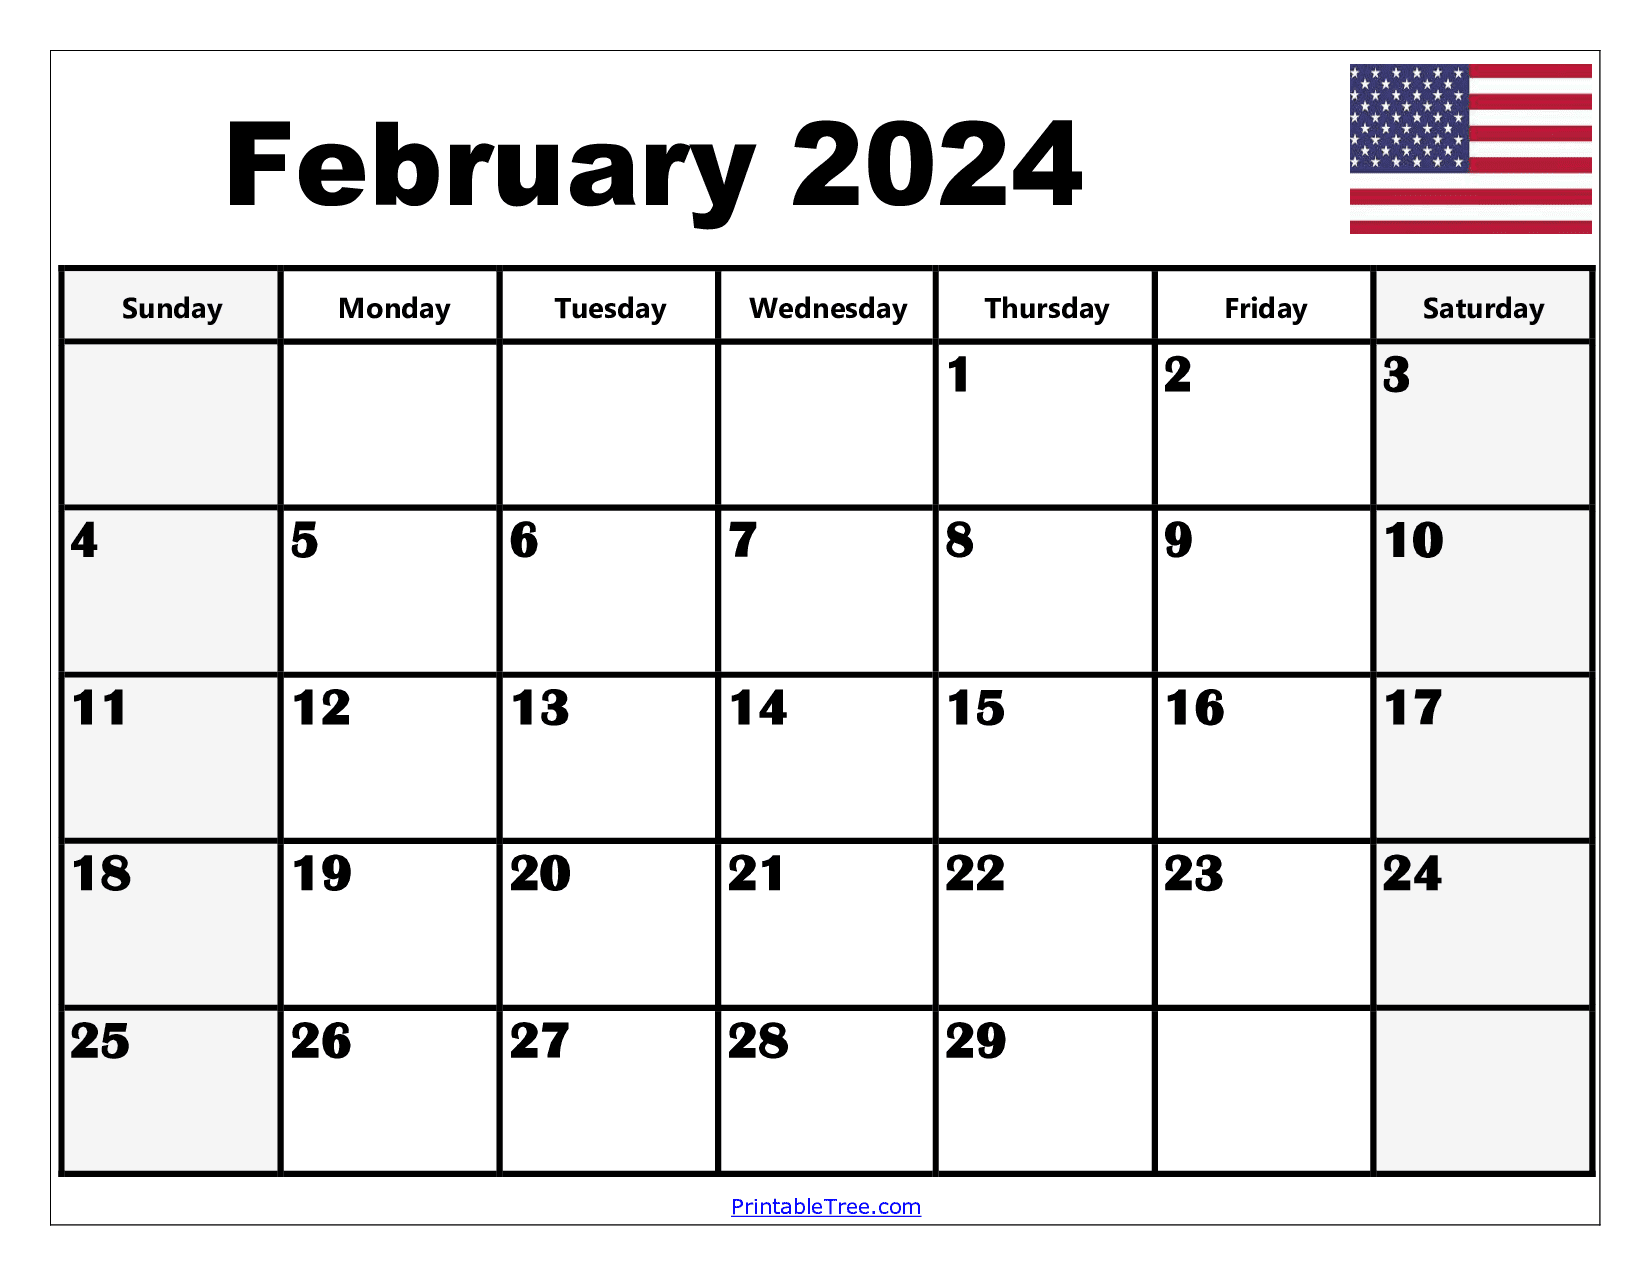 February 2024 Calendar Printable Pdf Template With Holidays for Free Printable February 2024 Calendar With Holidays